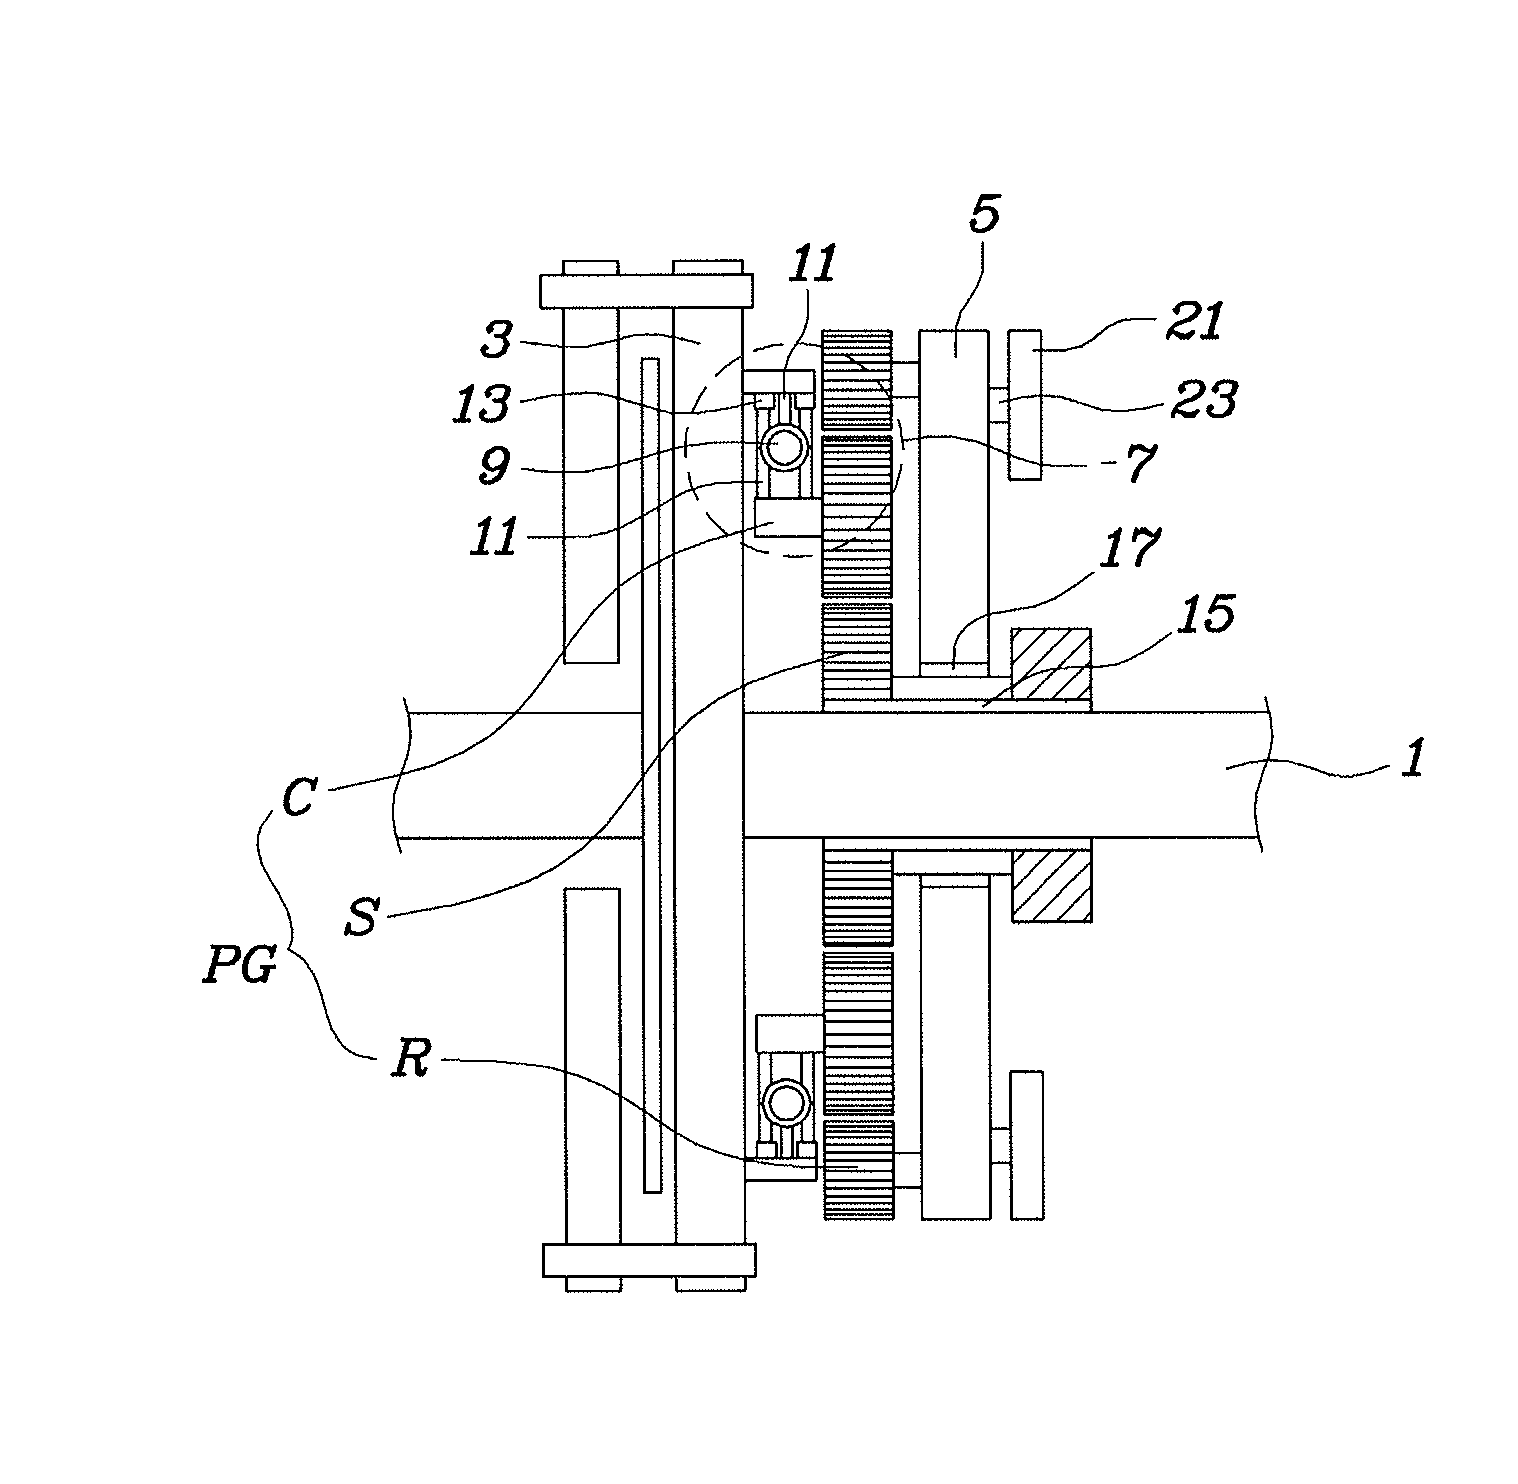 Apparatus for damping flywheel